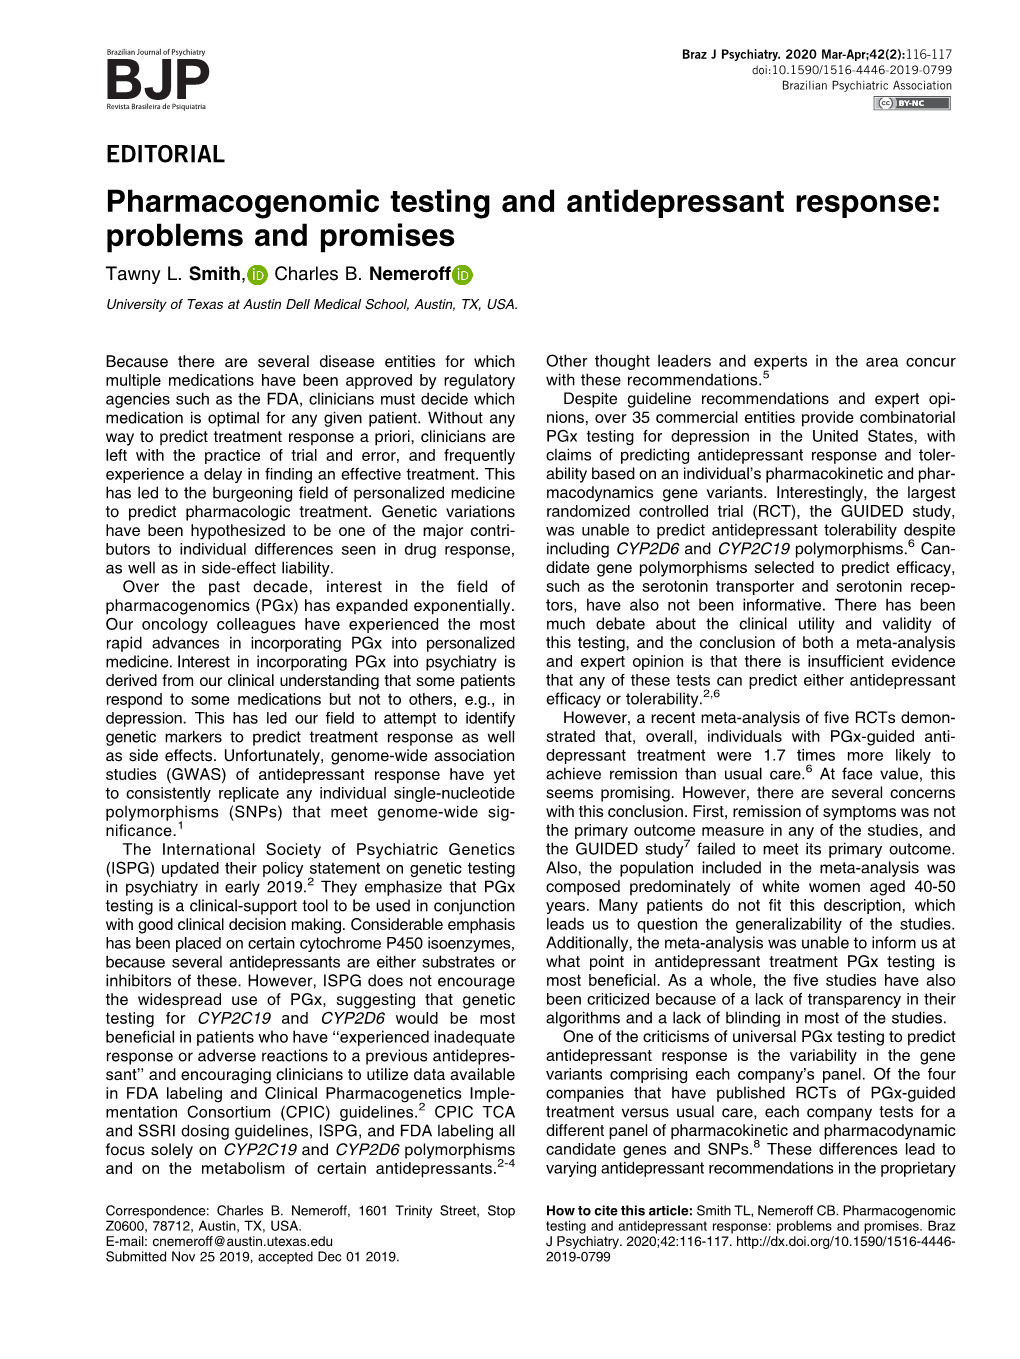 Pharmacogenomic Testing and Antidepressant Response: Problems and Promises Tawny L